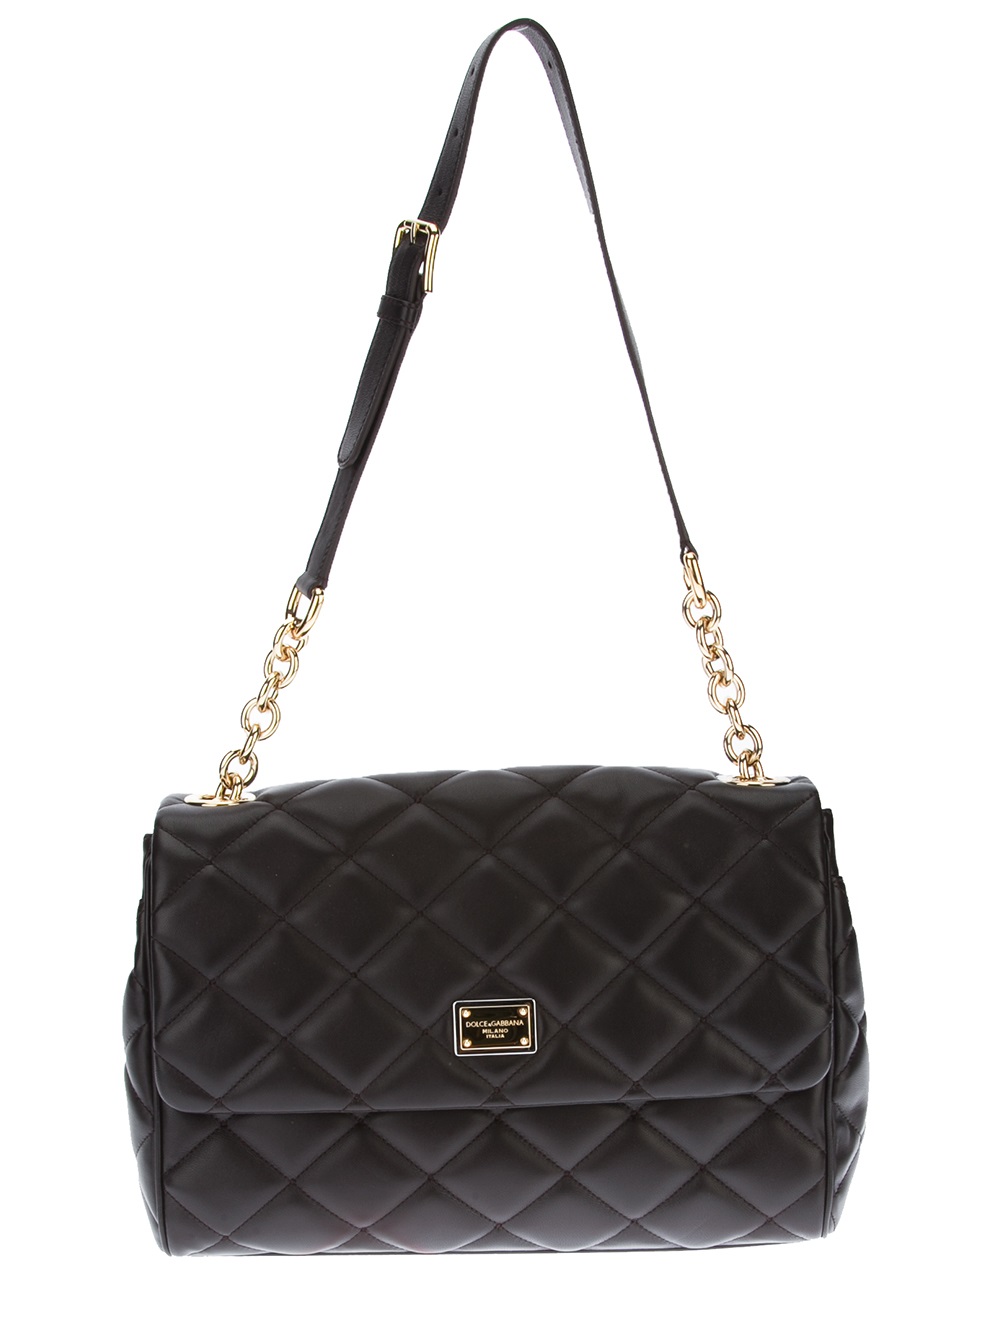 Dolce & Gabbana Quilted Leather Shoulder Bag in Brown (Black) - Lyst